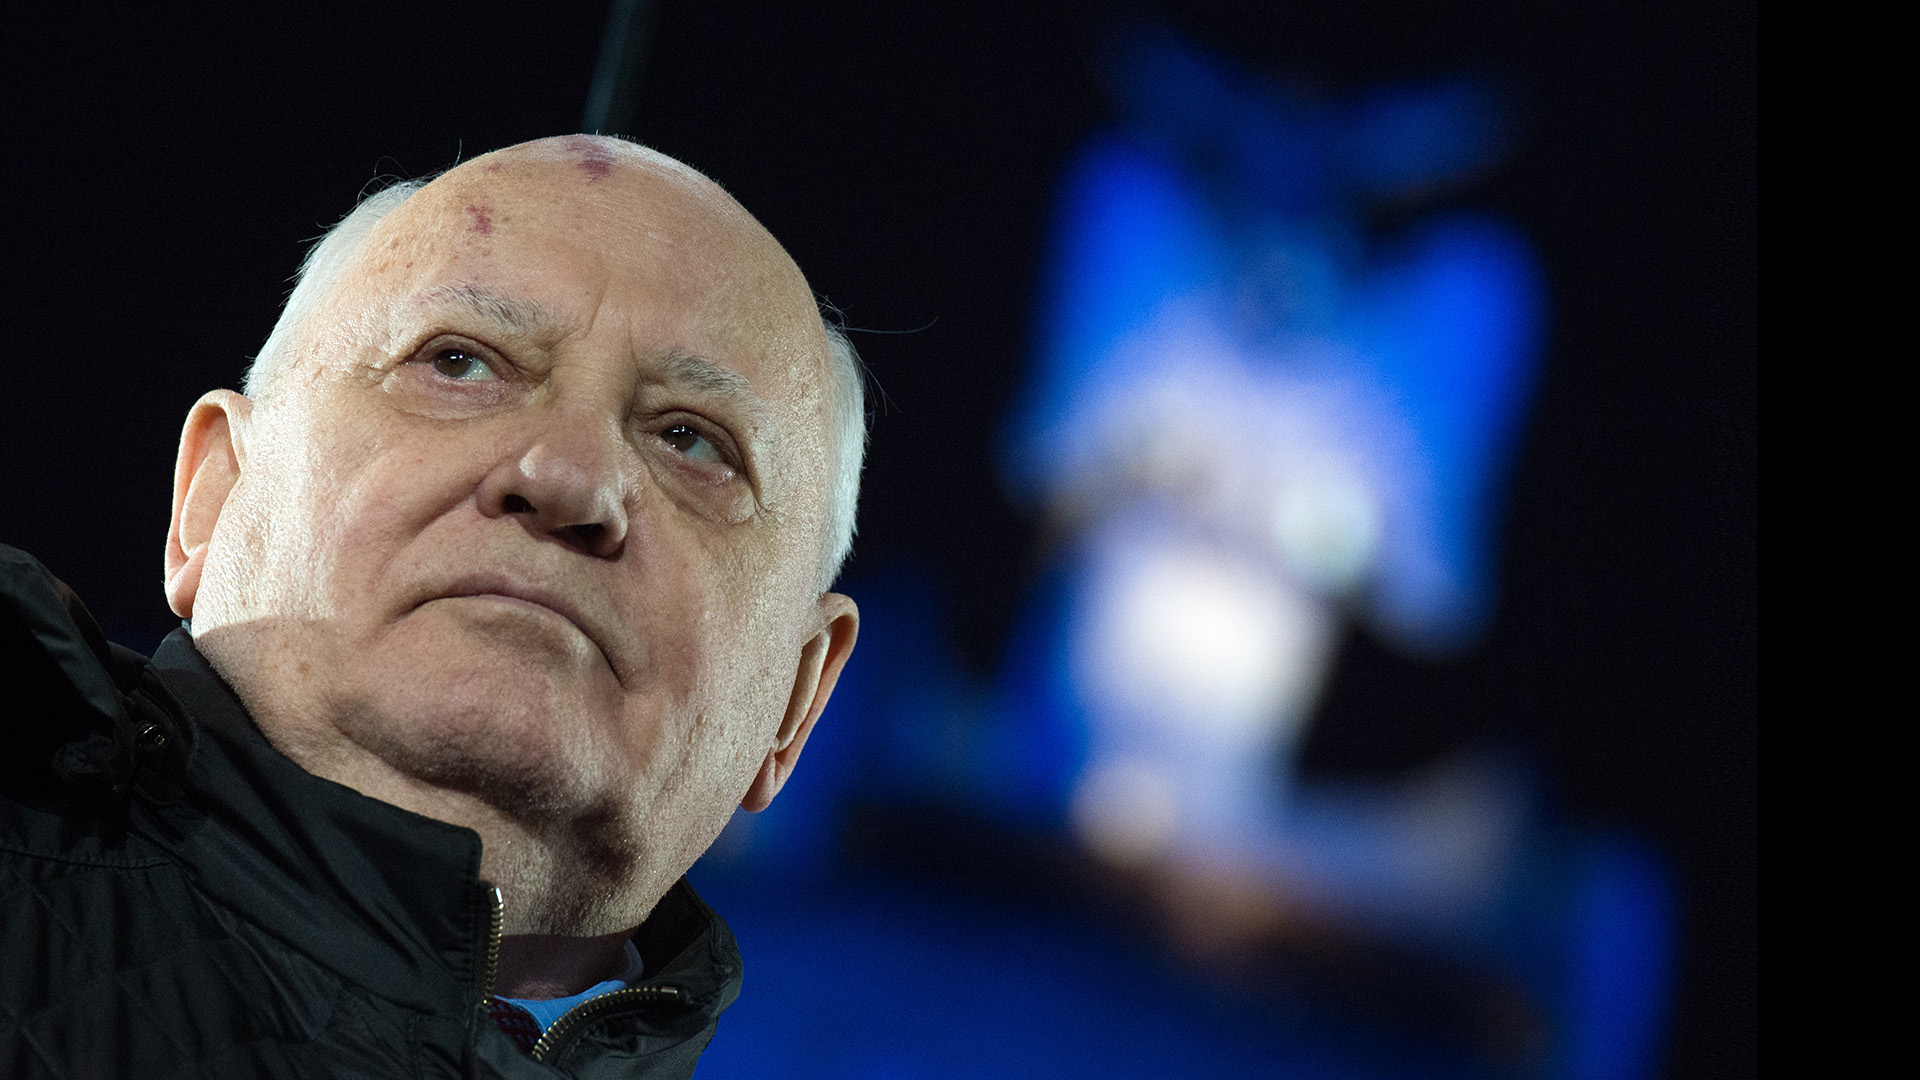 Michail Gorbatschow | picture alliance / dpa